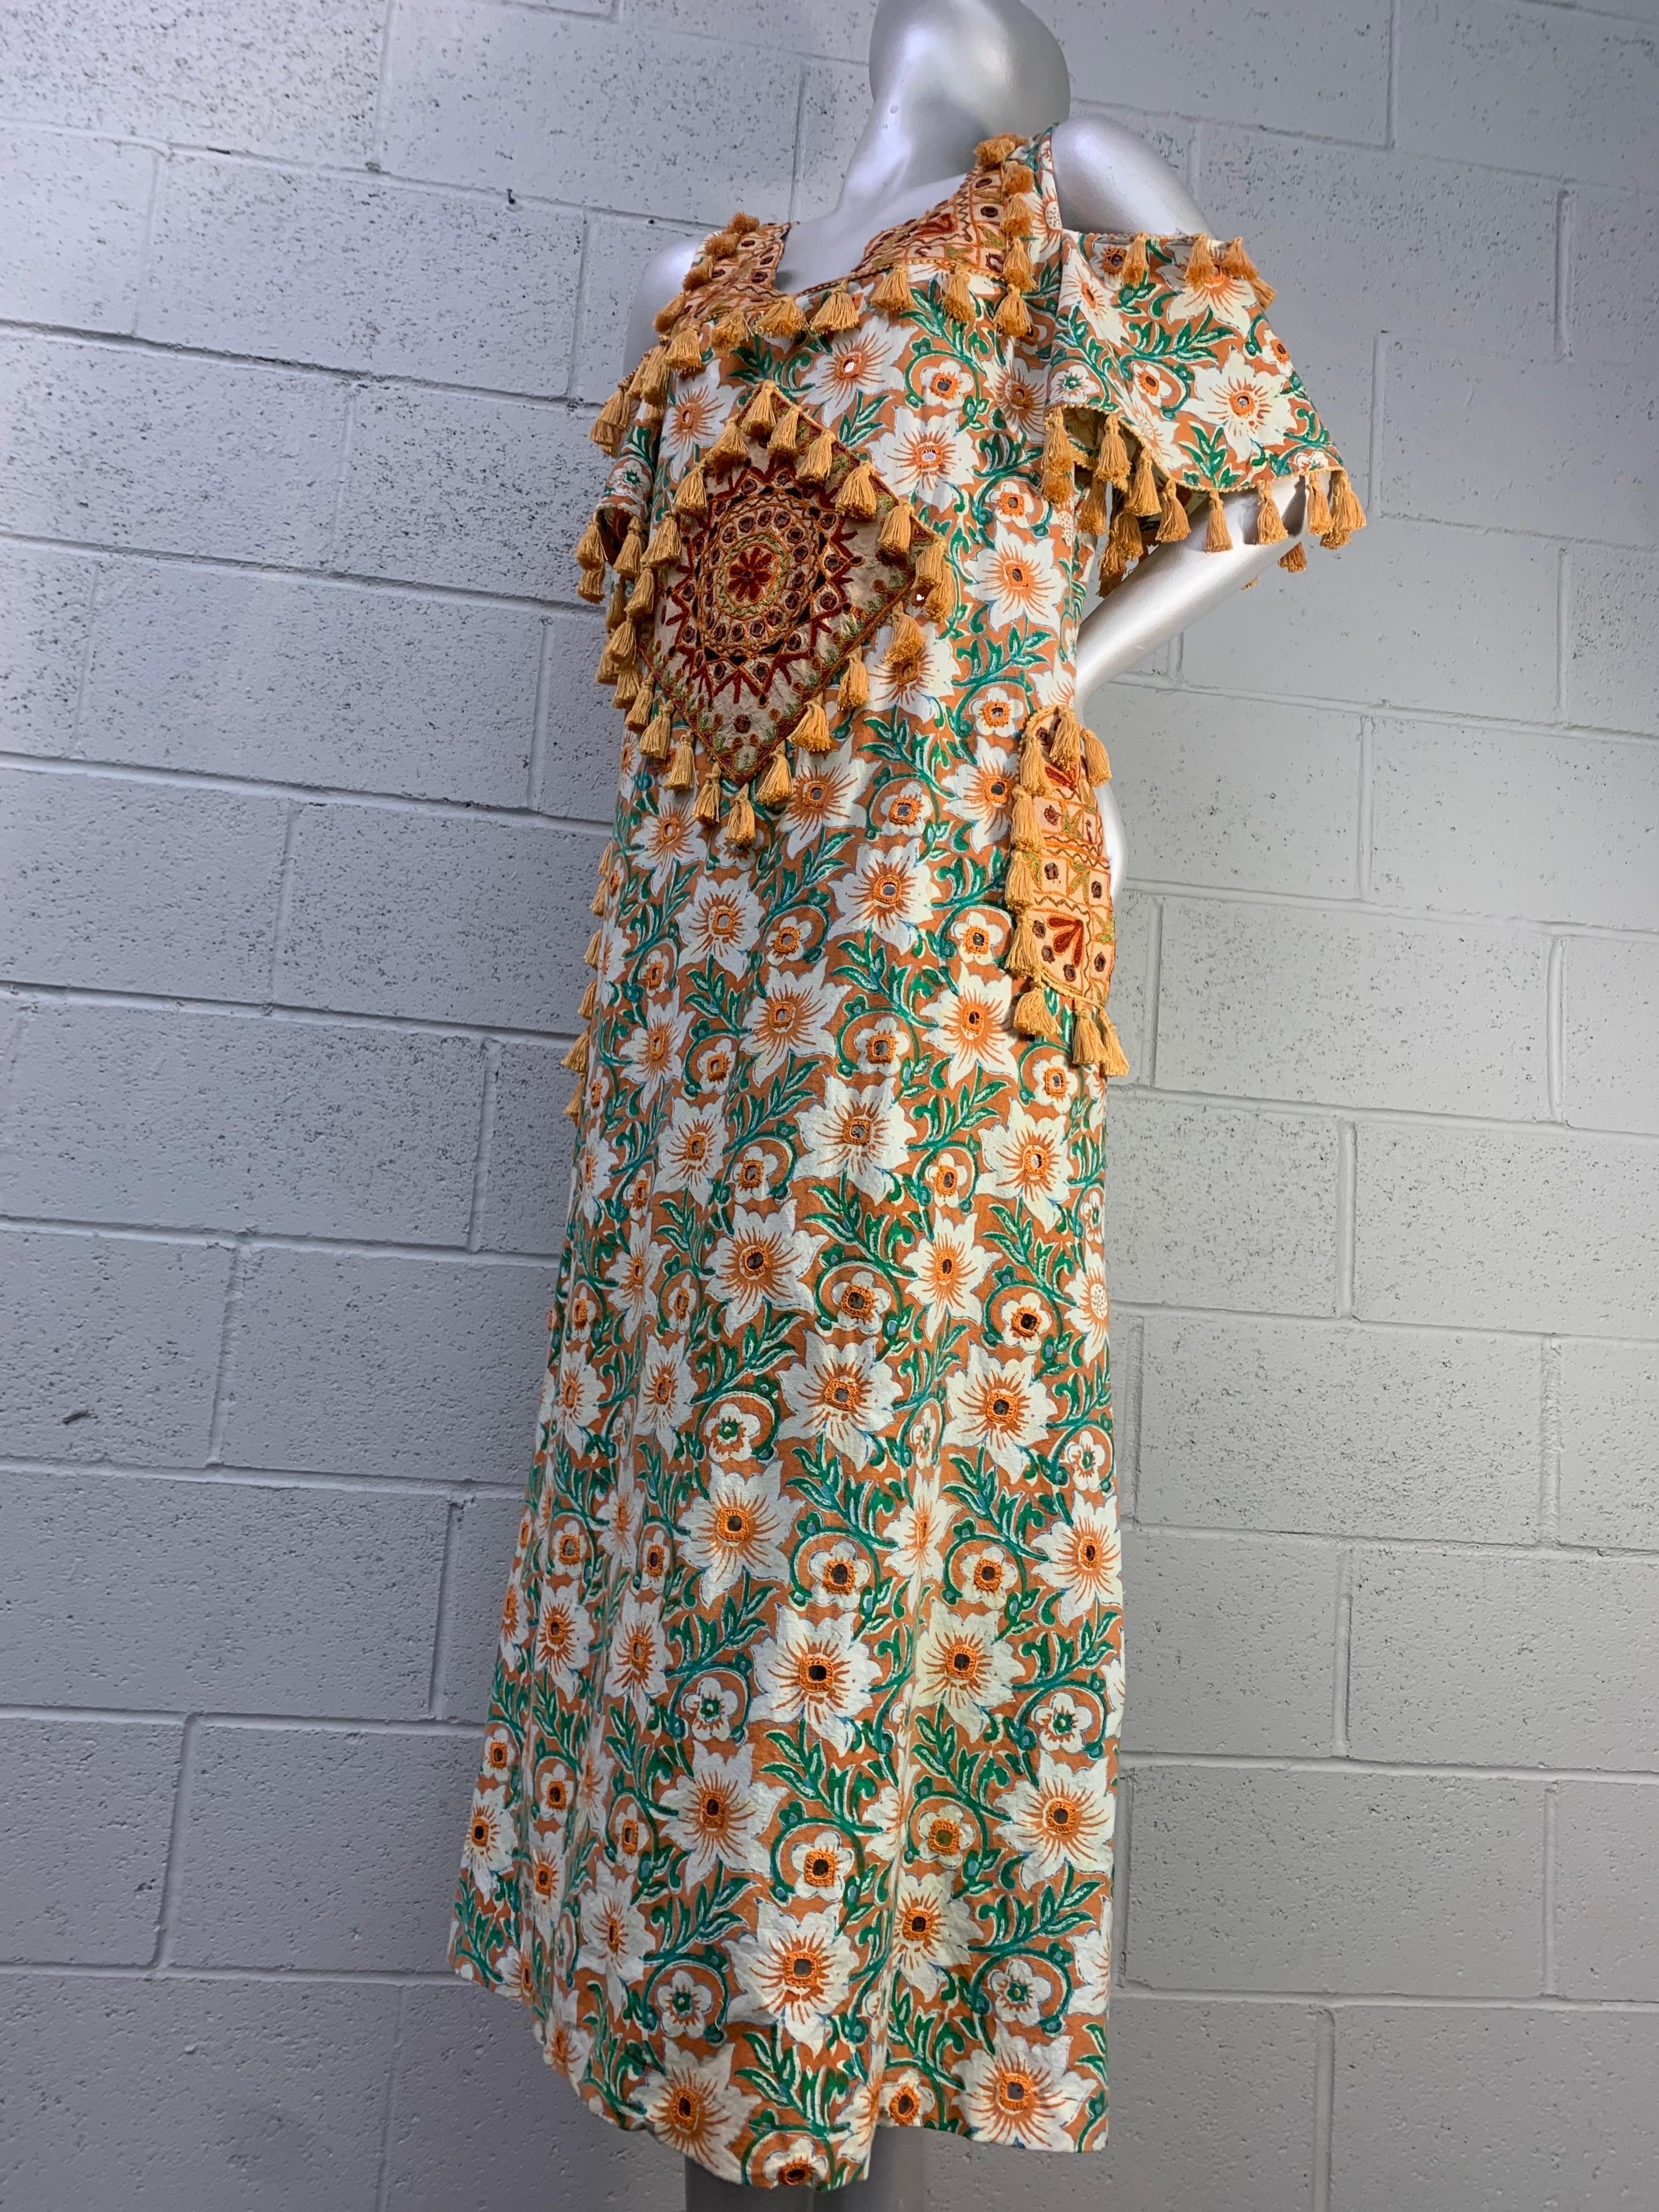 Torso Creations Cotton Lily Print Resort Dress w Mirror Tile and Tassel Fringe 12